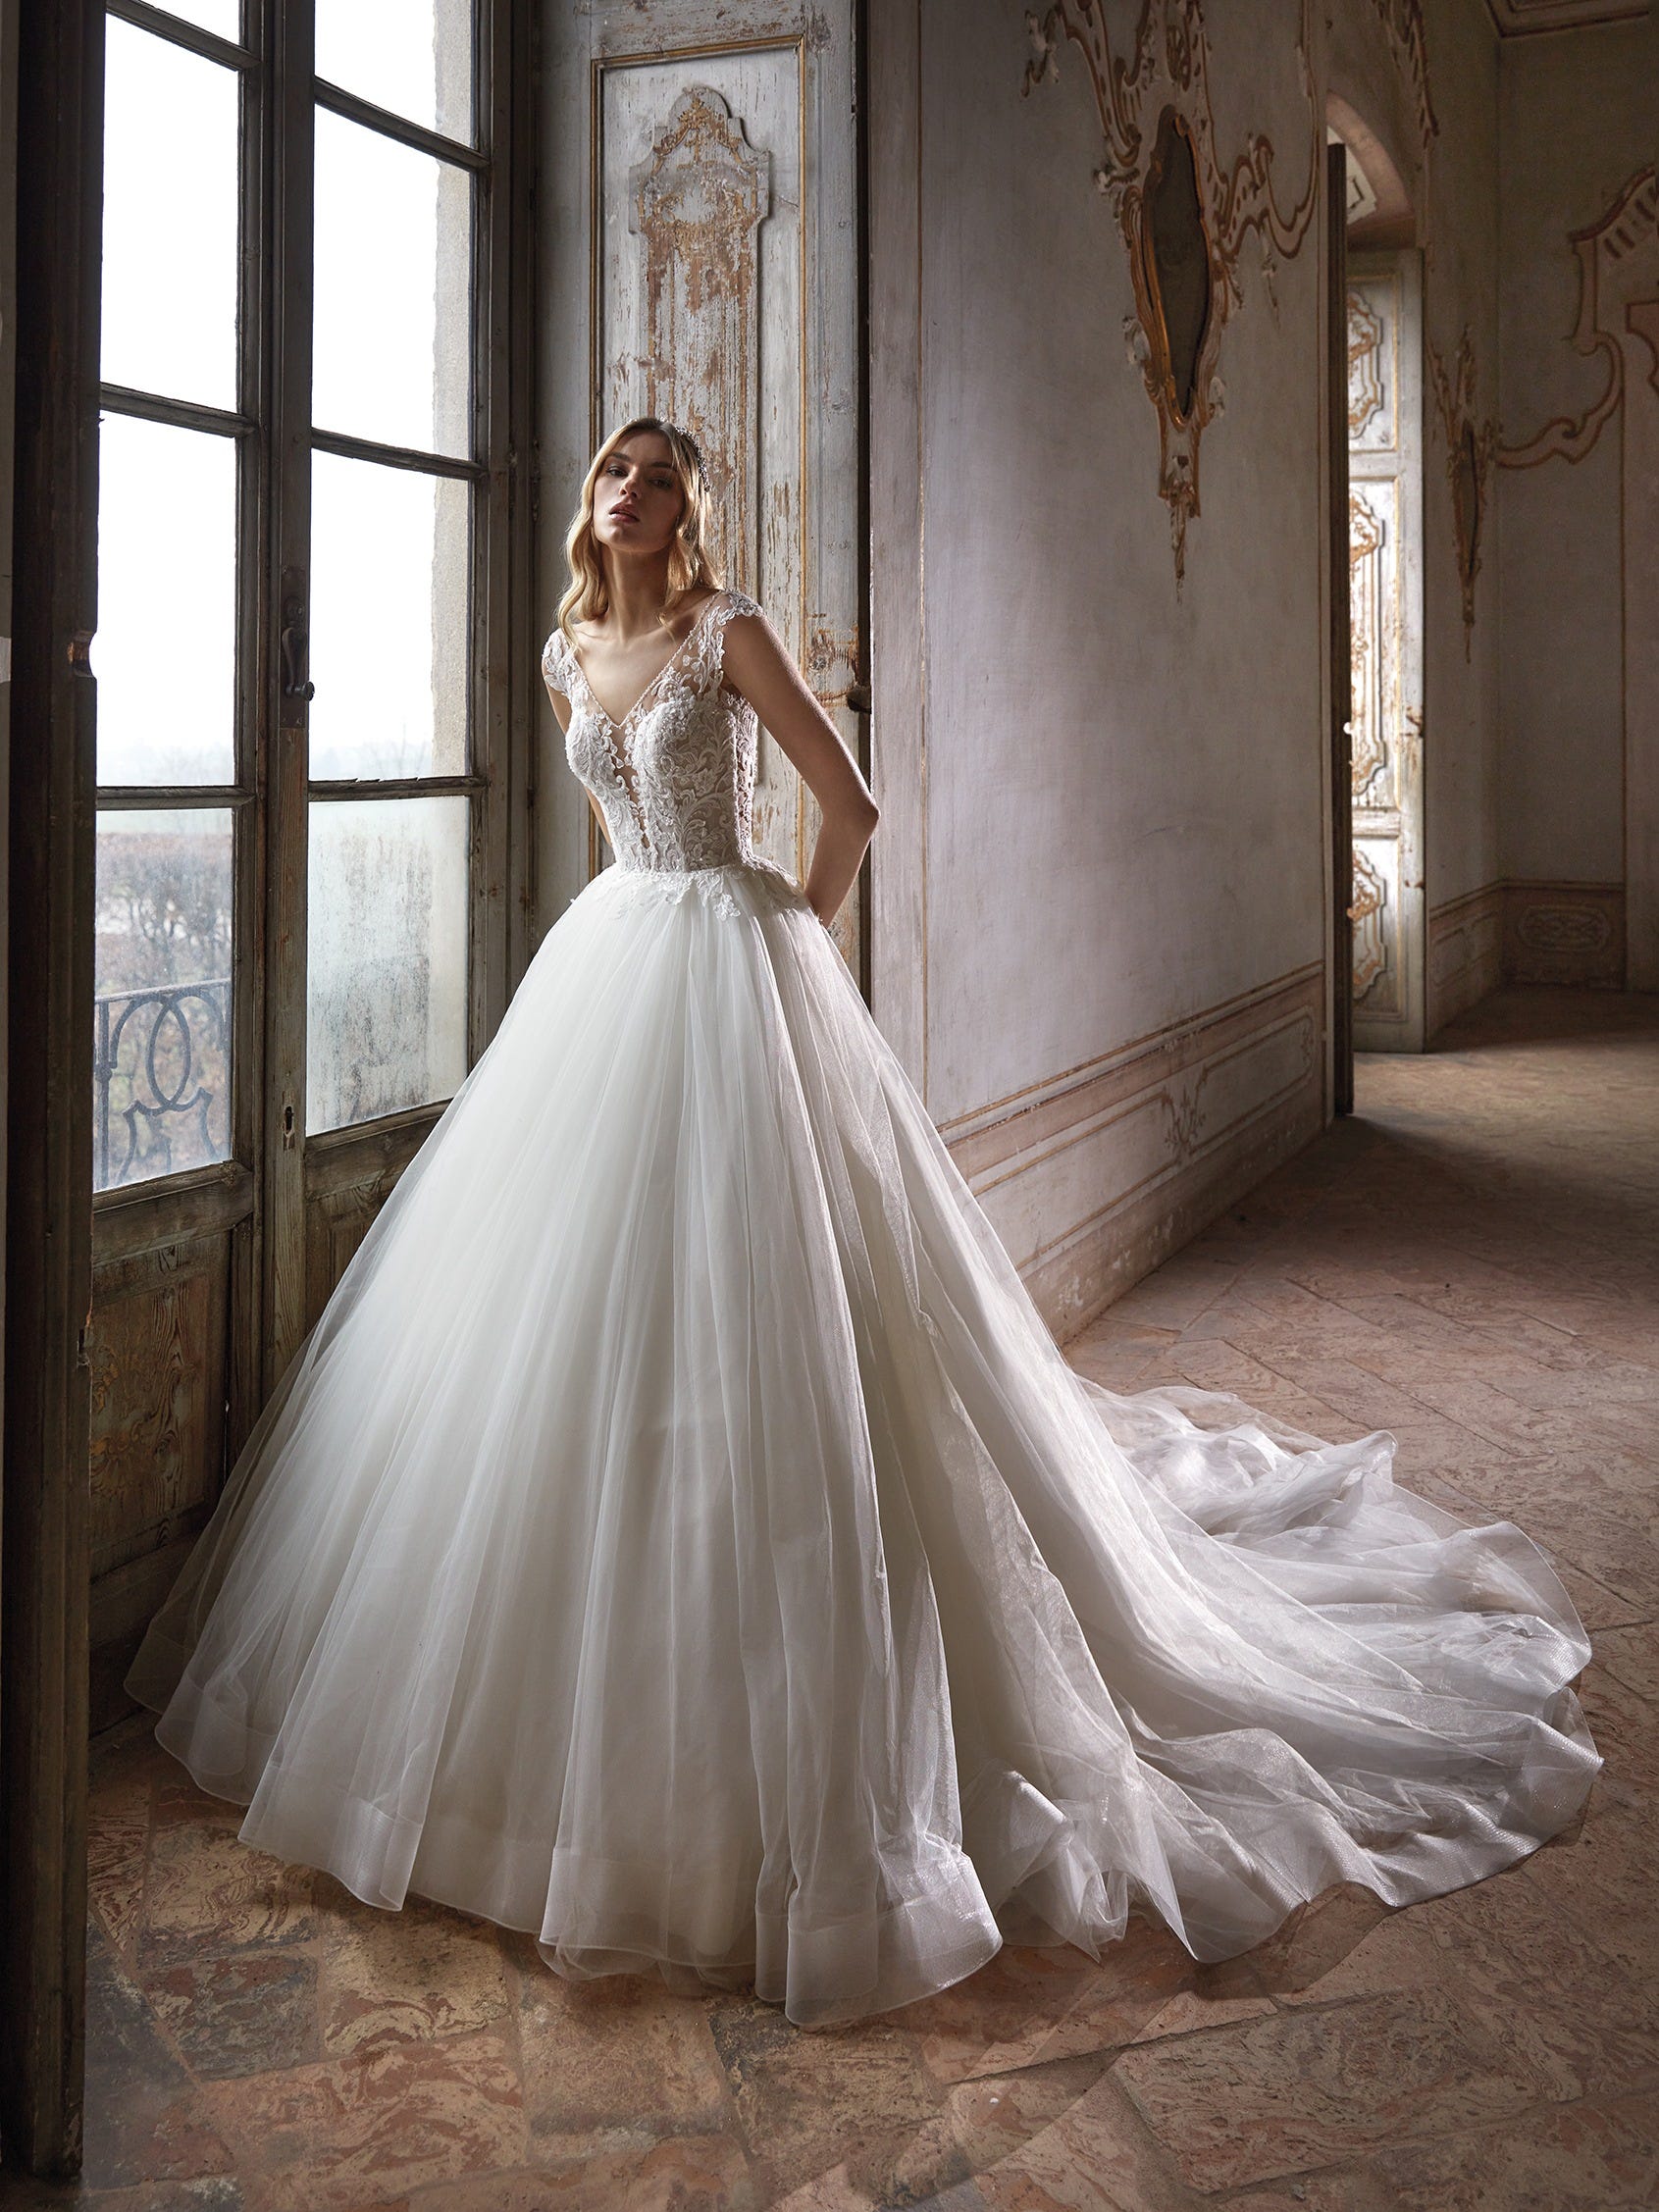 dimitras-bridal-chicago-berta-wedding-dresses - Dimitra's Bridal Couture